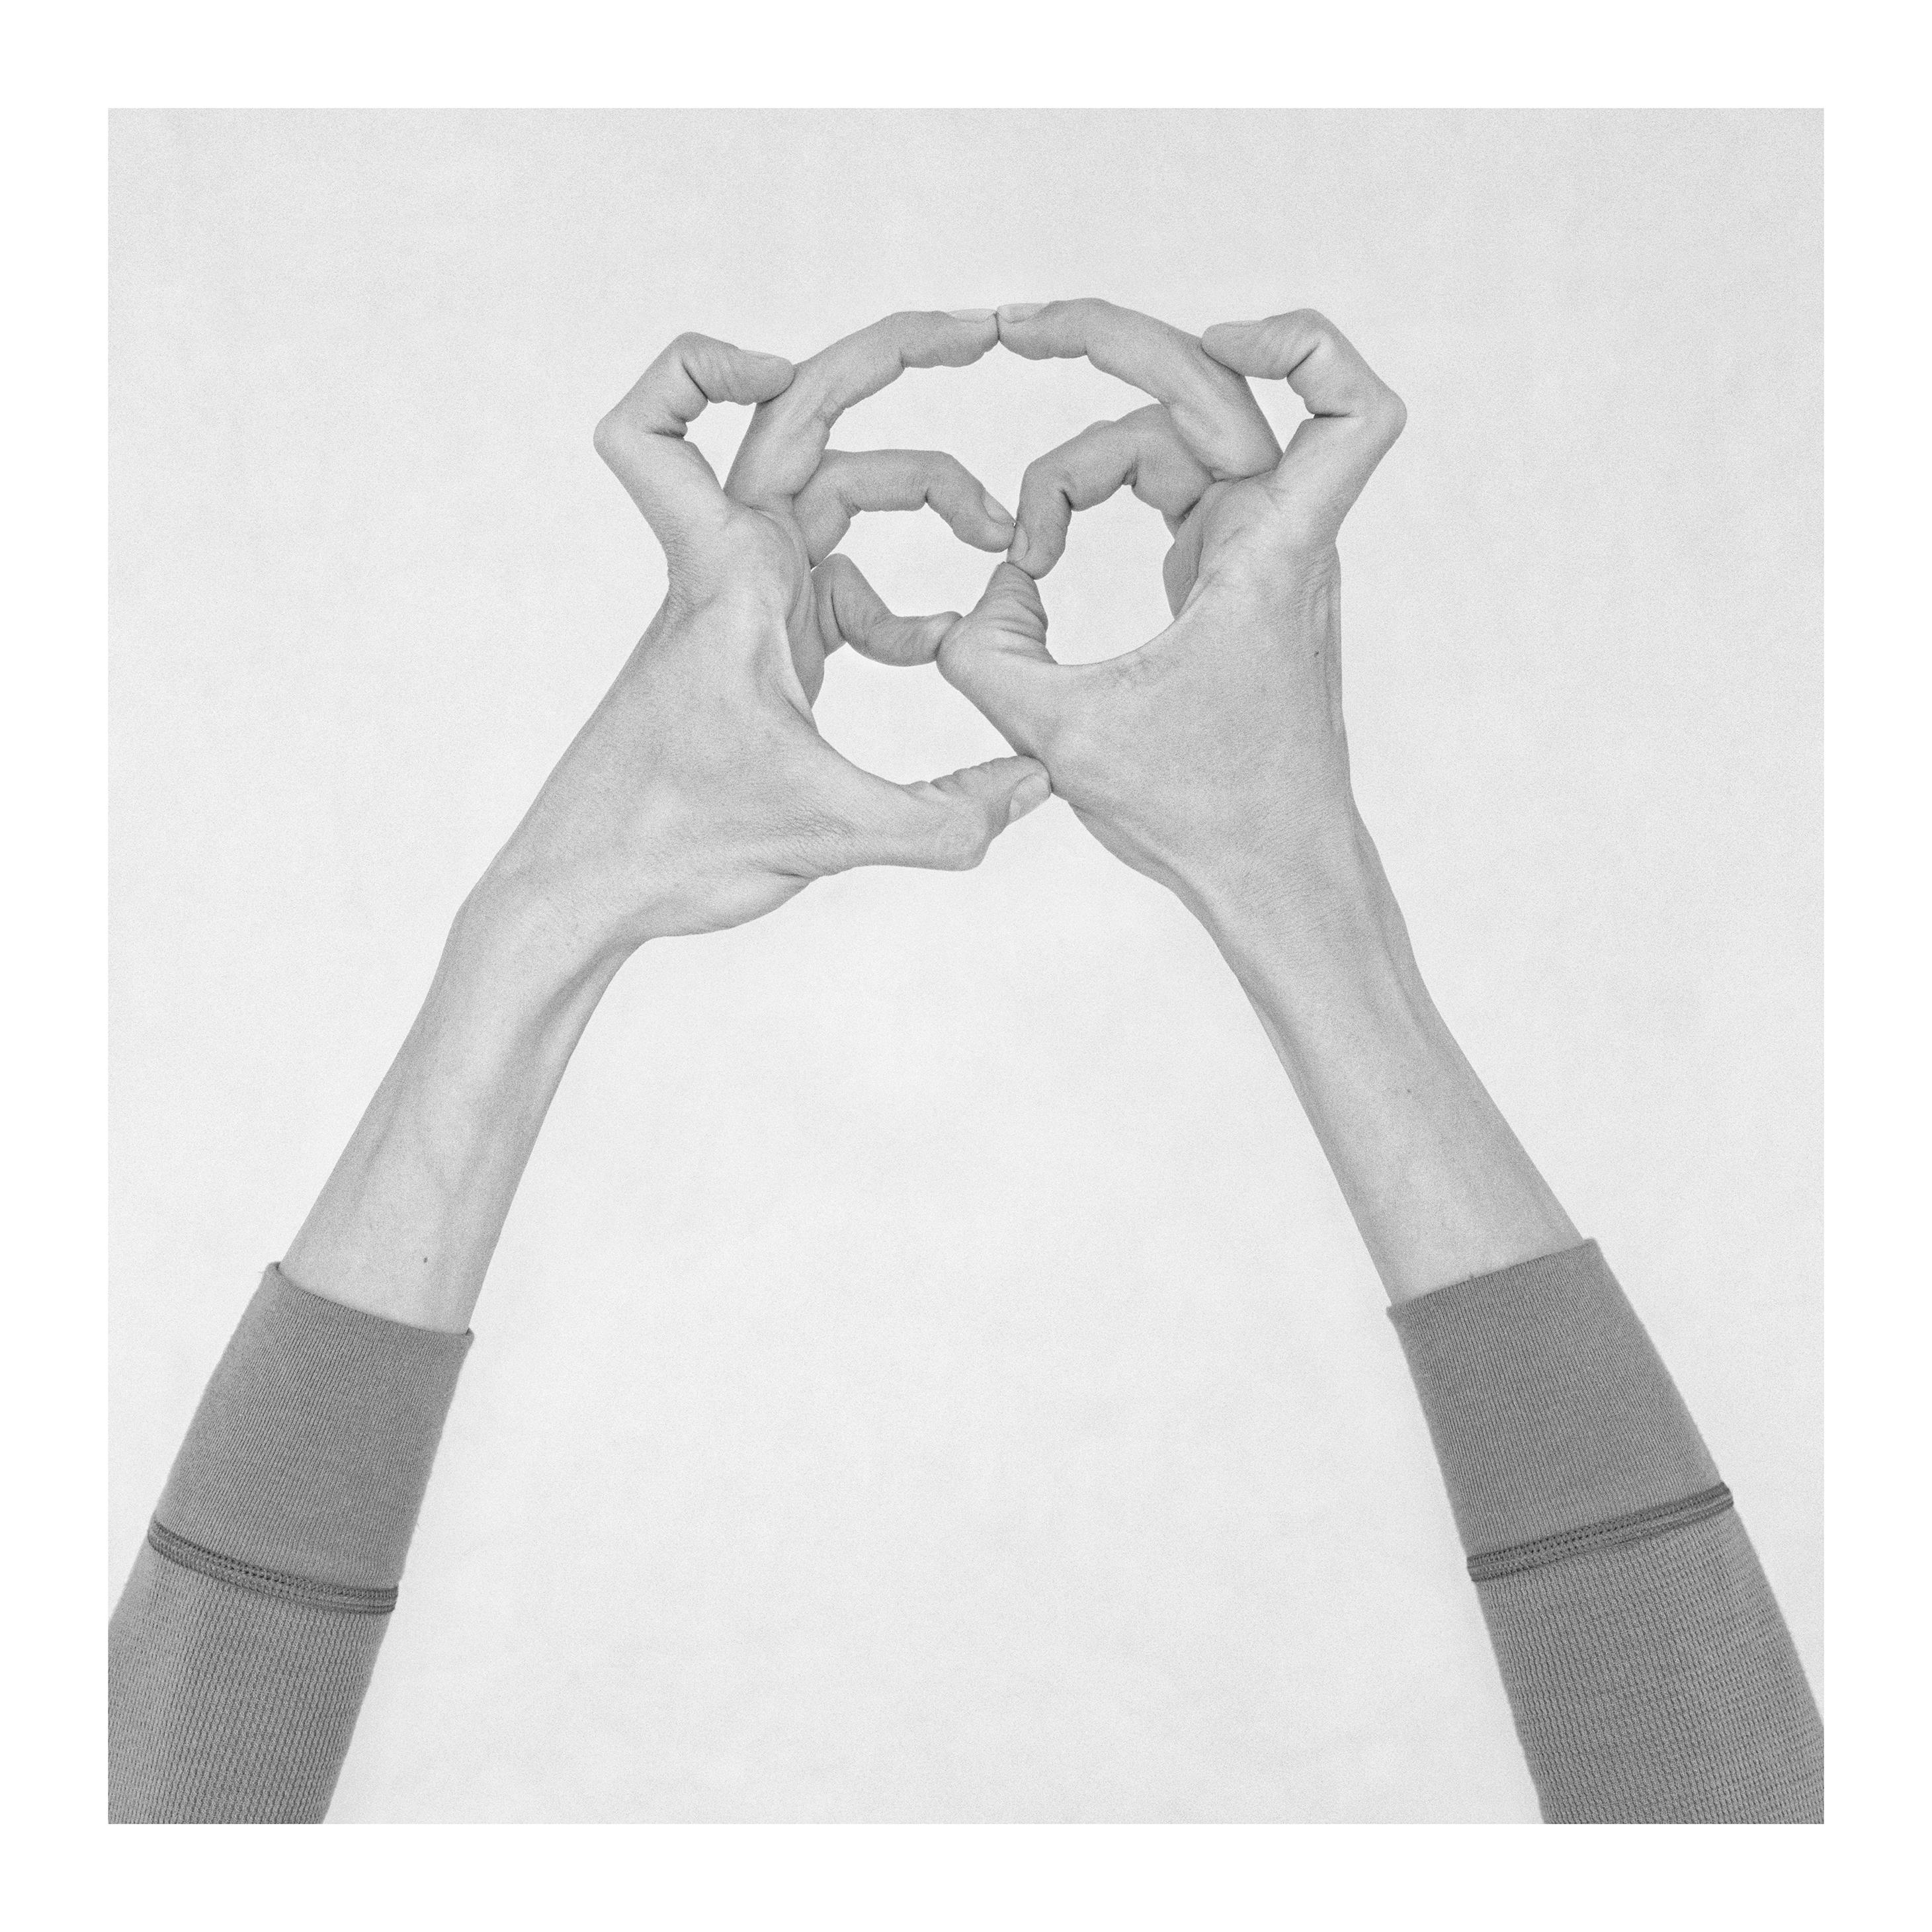 Untitled X, Untitled XXIX, and Untitled XXXIX, Hands. Triptych - Aesthetic Movement Photograph by Nico Baixas / Gos-com-fuig